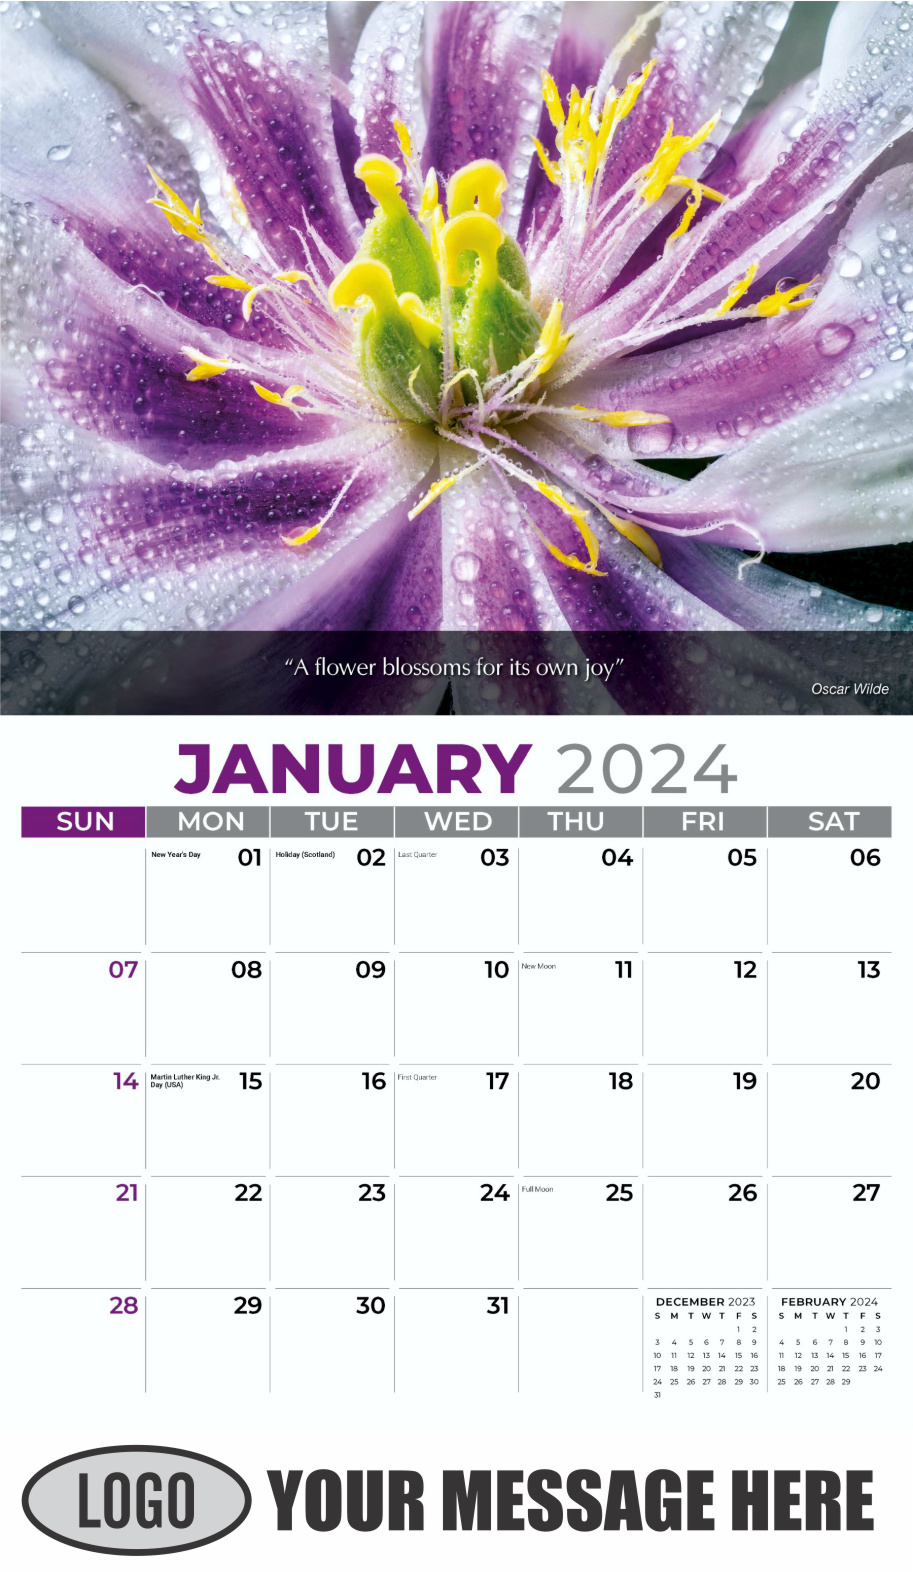 Flowers and Gardens 2024 Business Advertising Calendar - January